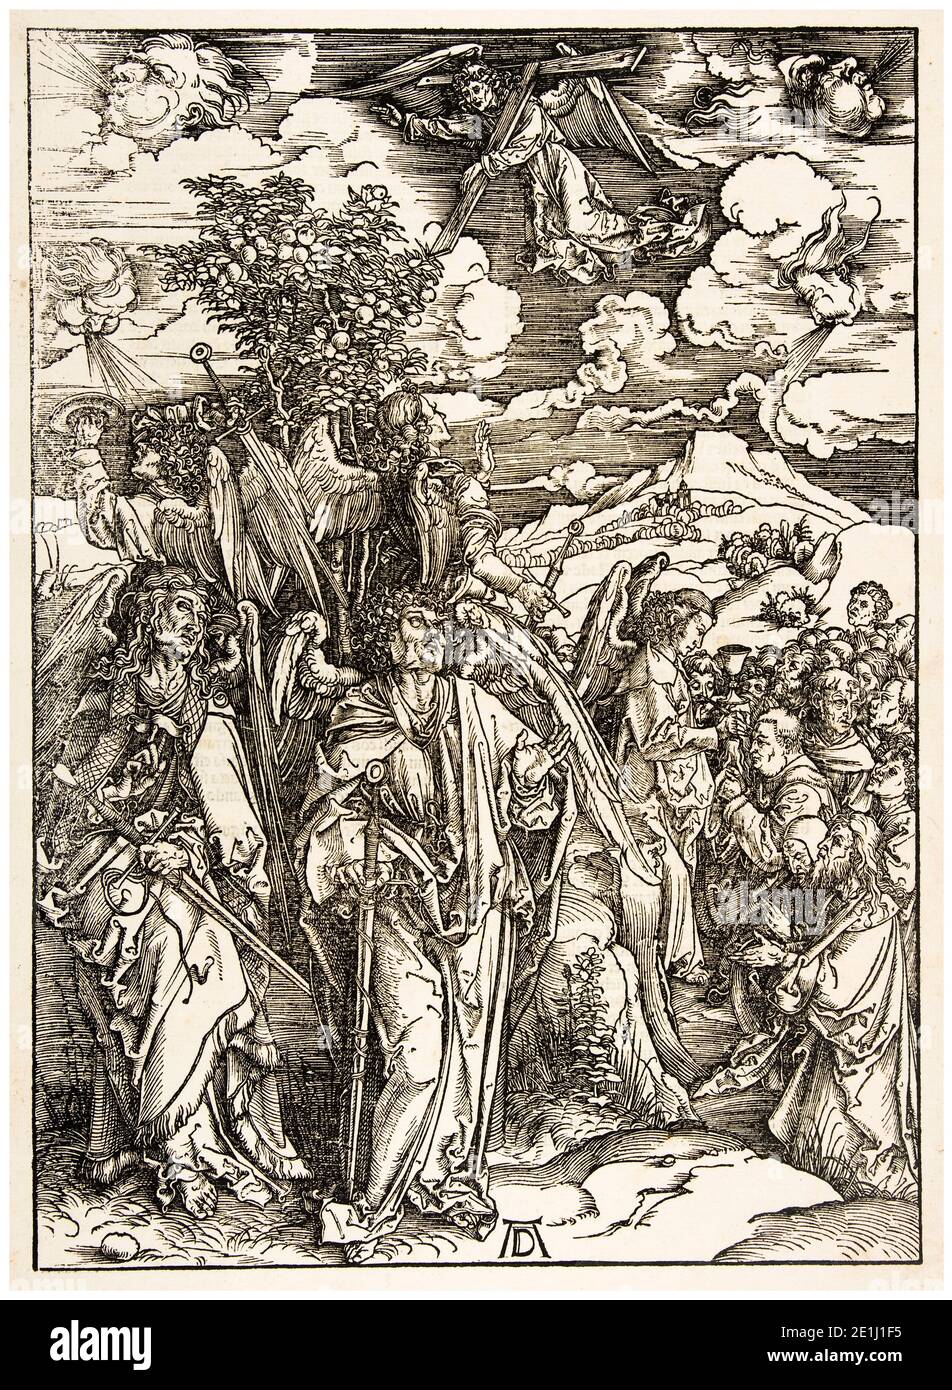 Albrecht Dürer, The Apocalypse: The Four Angels Holding the Winds, woodcut print, 1498 Stock Photo